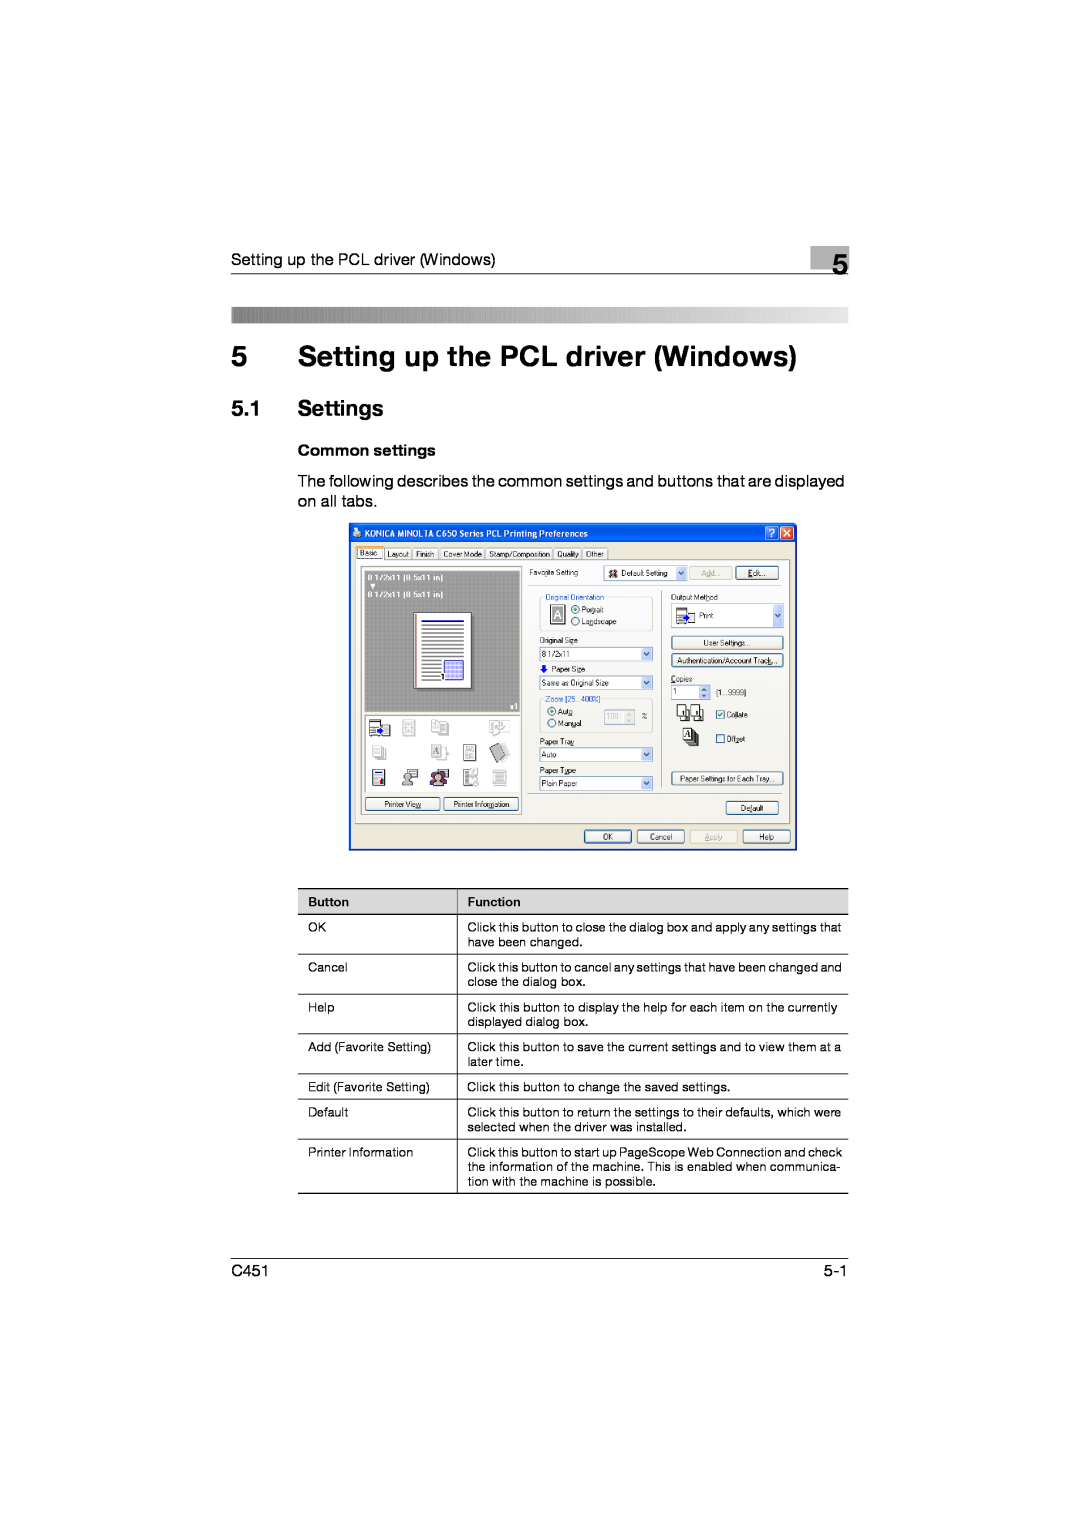 Konica Minolta C451 manual 5Setting up the PCL driver Windows, 5.1Settings 